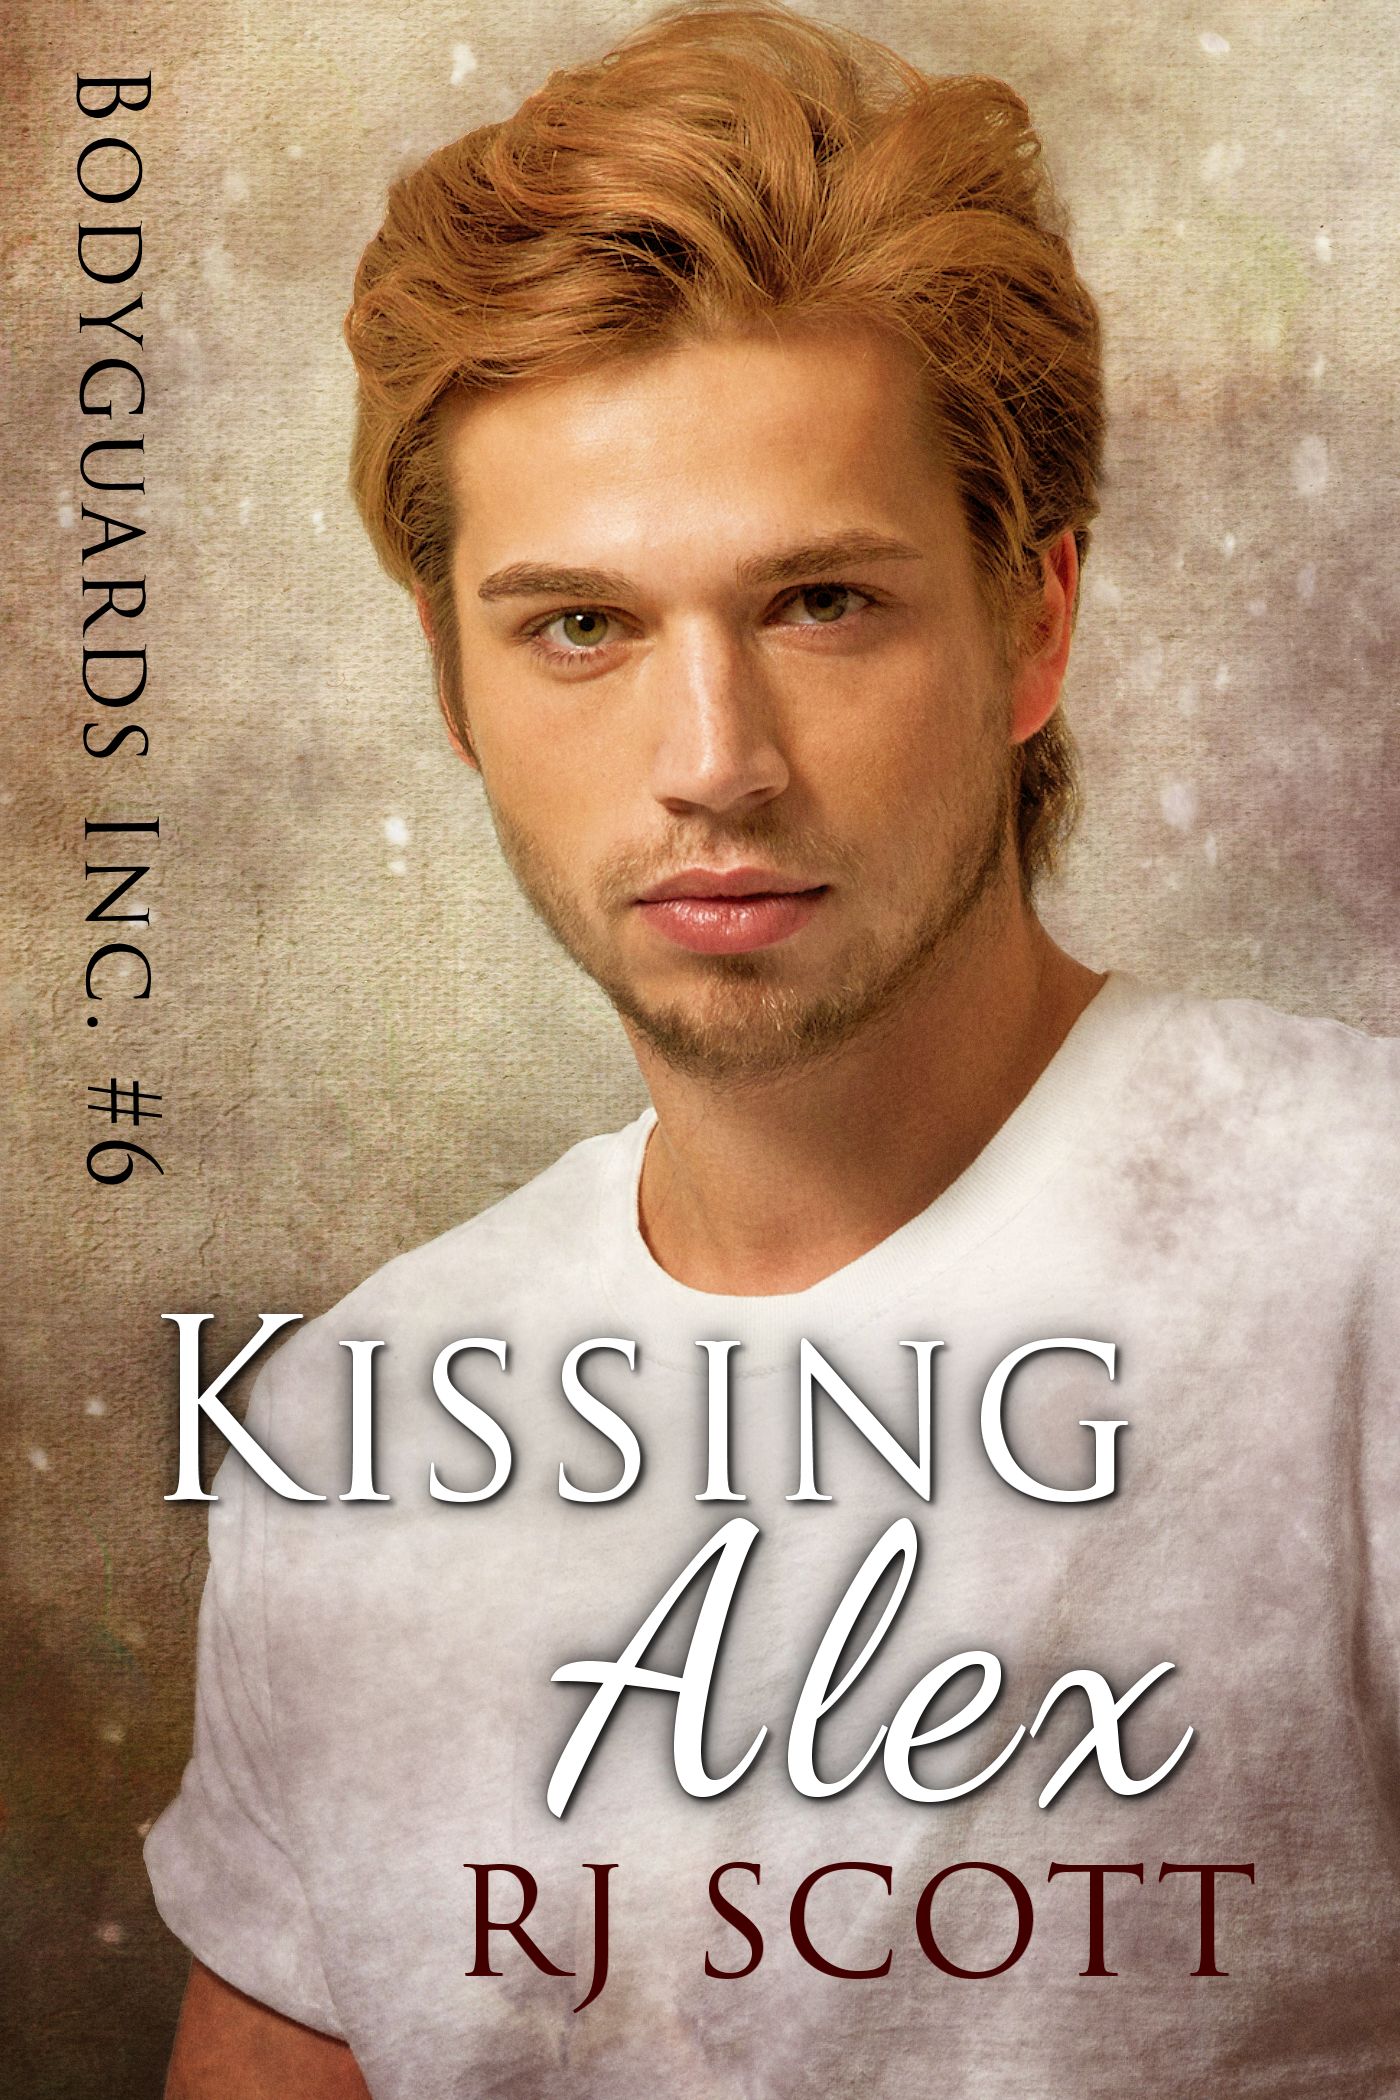 Kissing Alex by R.J. Scott